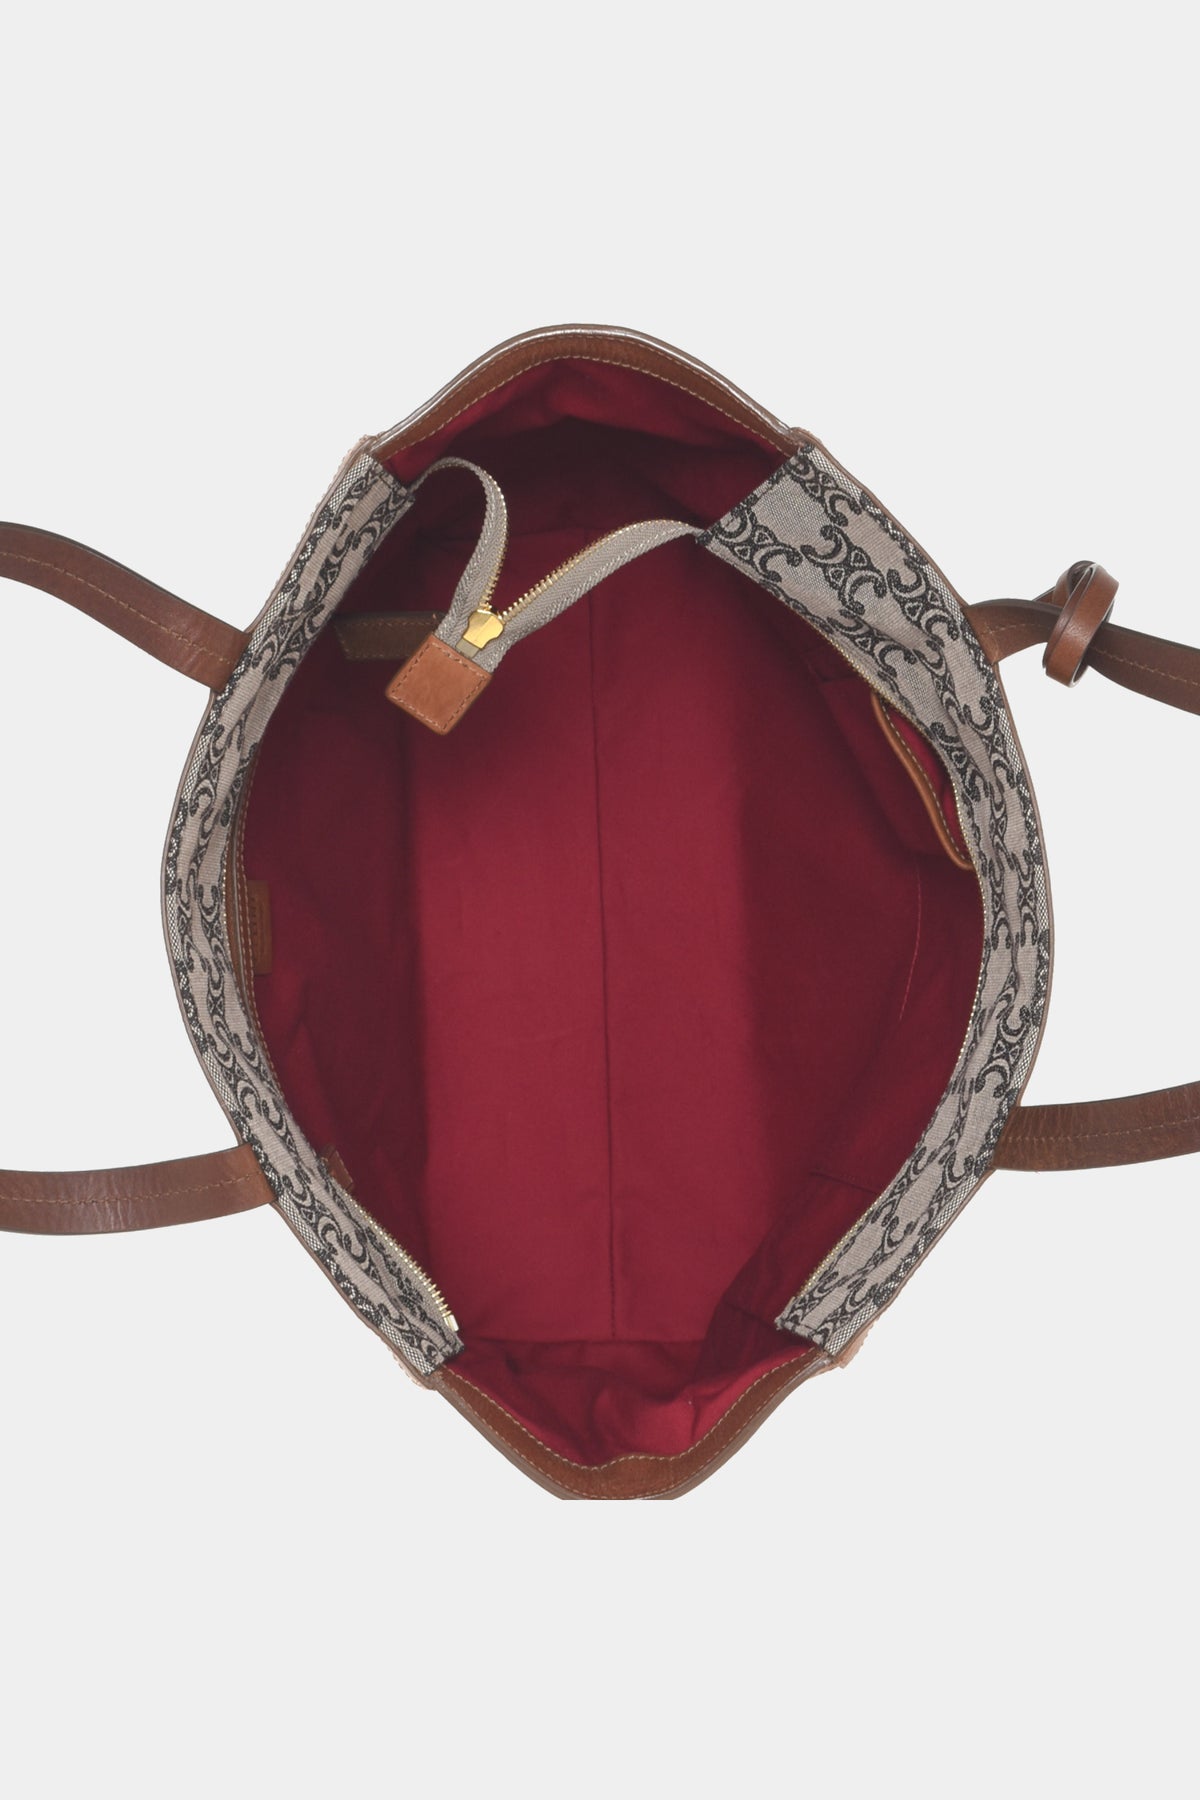 Cabas Mezzo, Used & Preloved Louis Vuitton Tote Bag, LXR USA, Brown